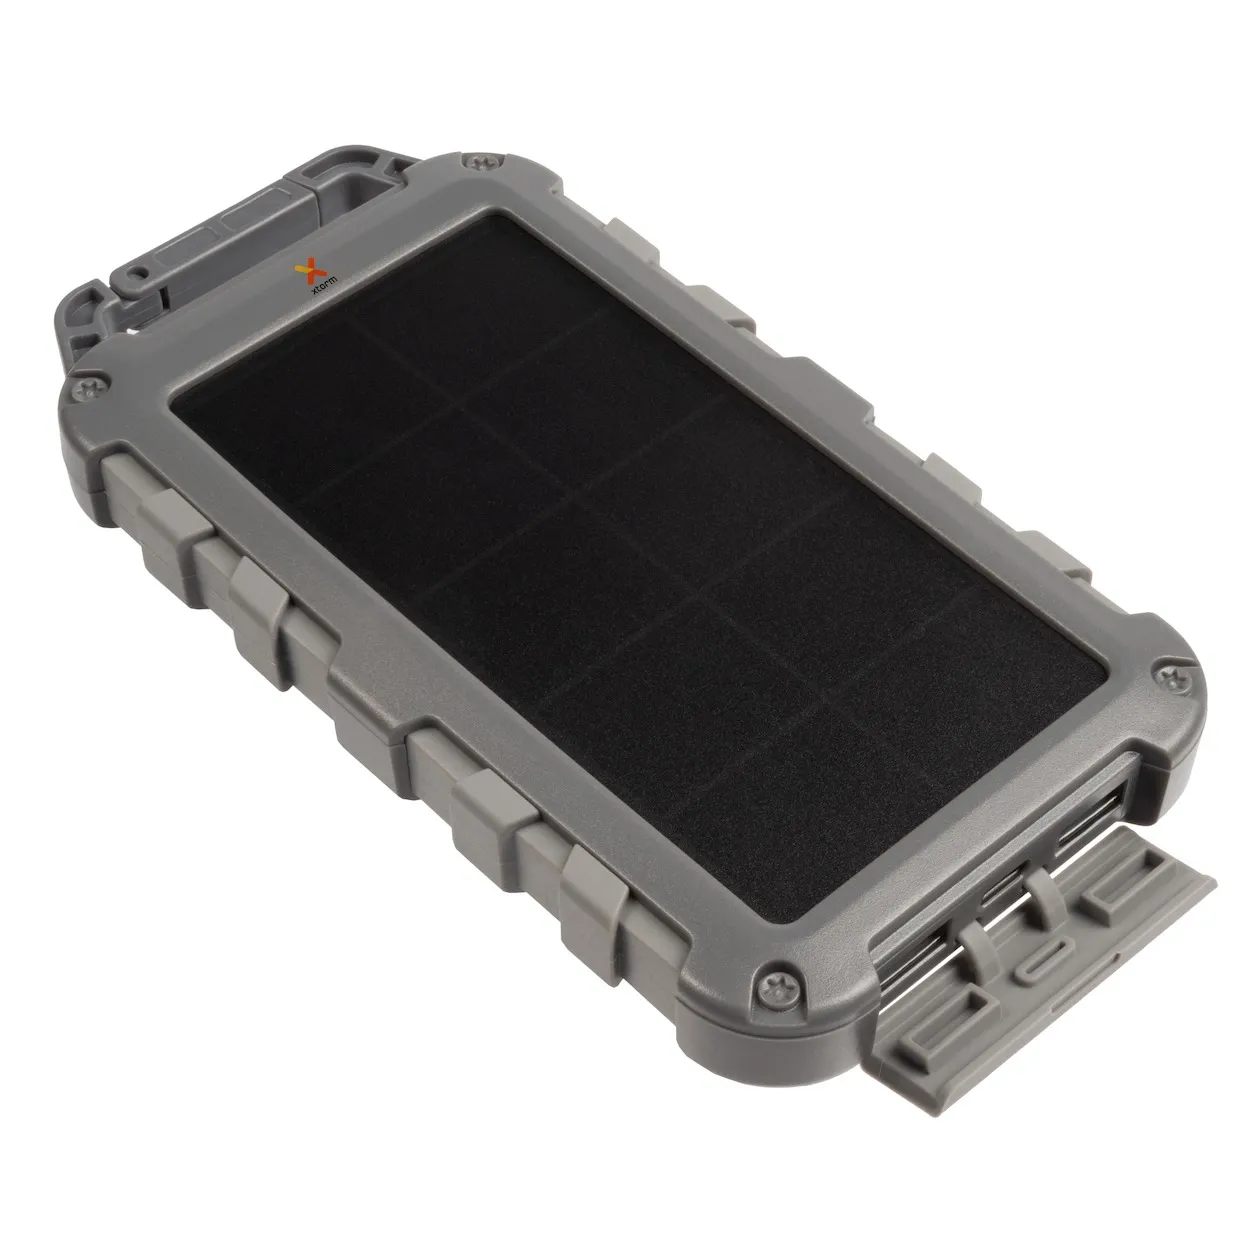 Xtorm Fuel Series 4 Power Pack, solar module, 10000 mAh